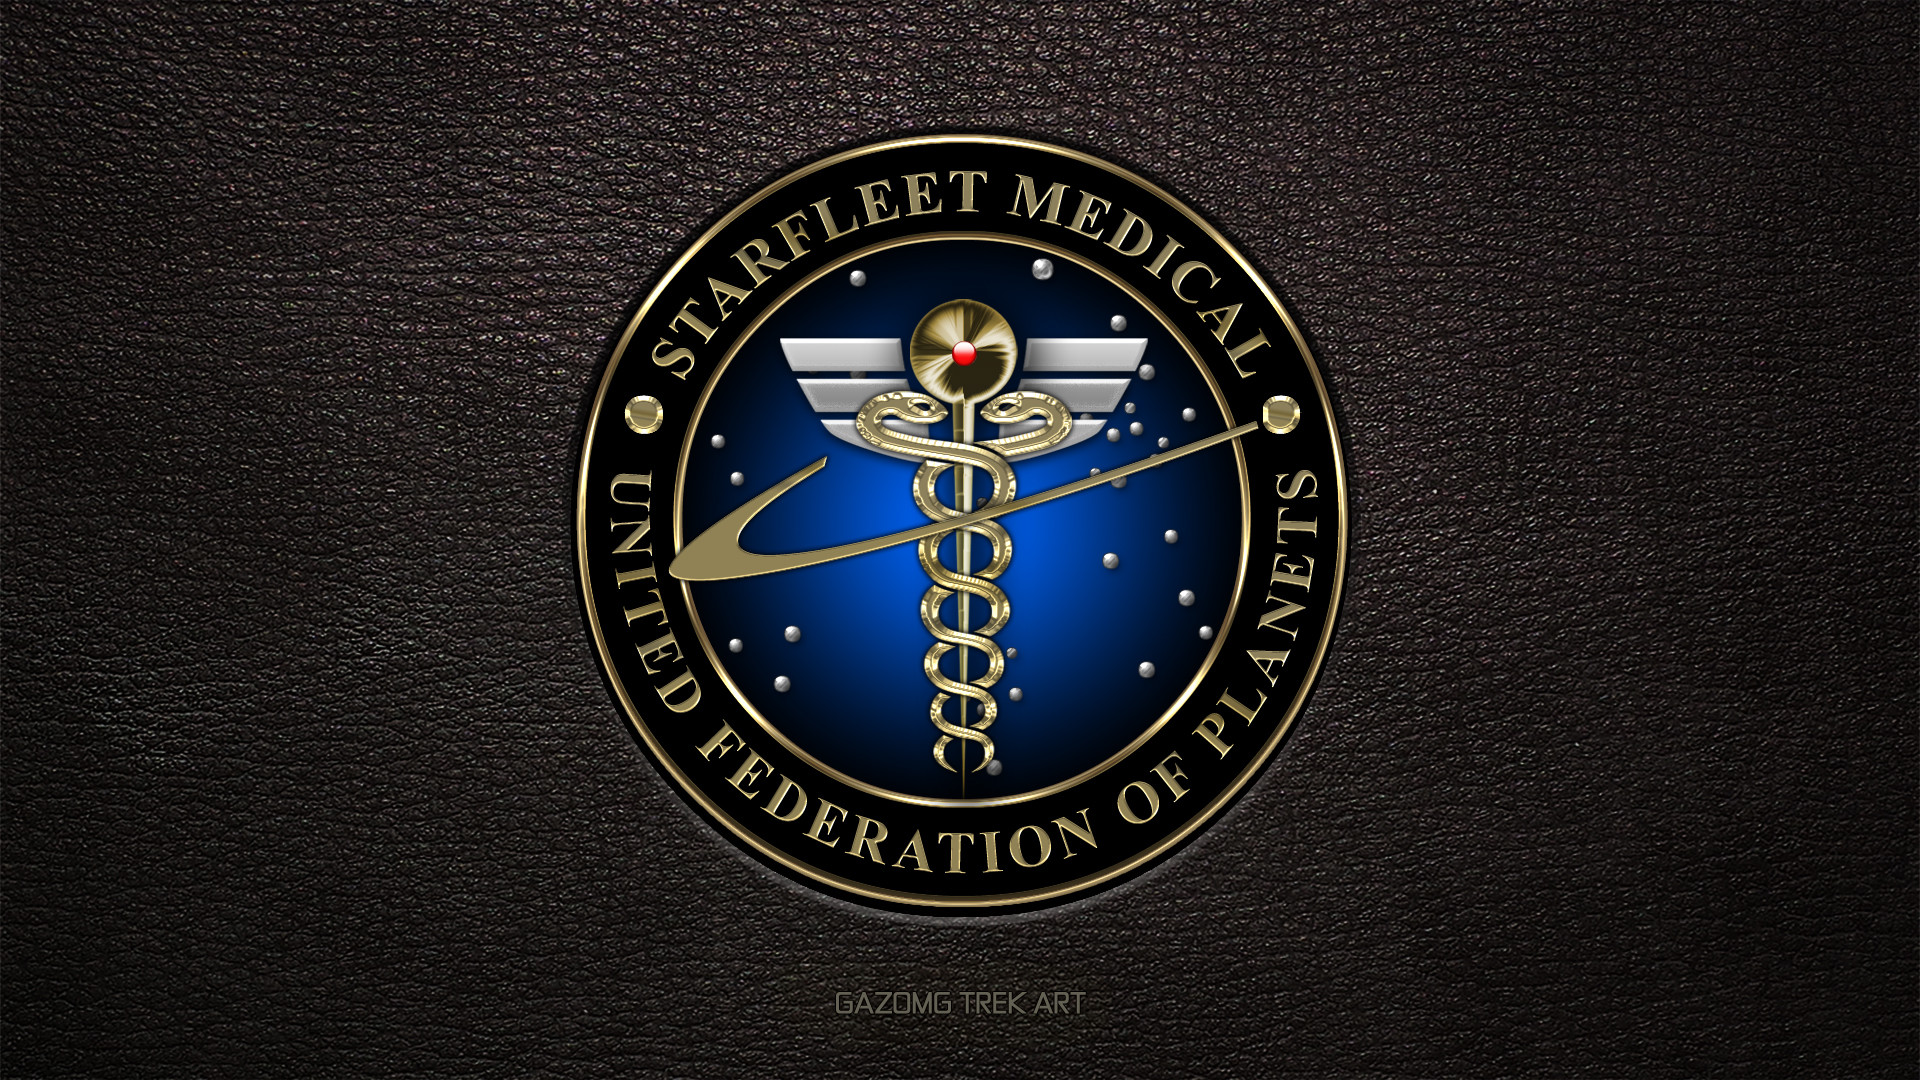 1920x1080 ... Starfleet Medical Logo Star Trek (updated) by gazomg